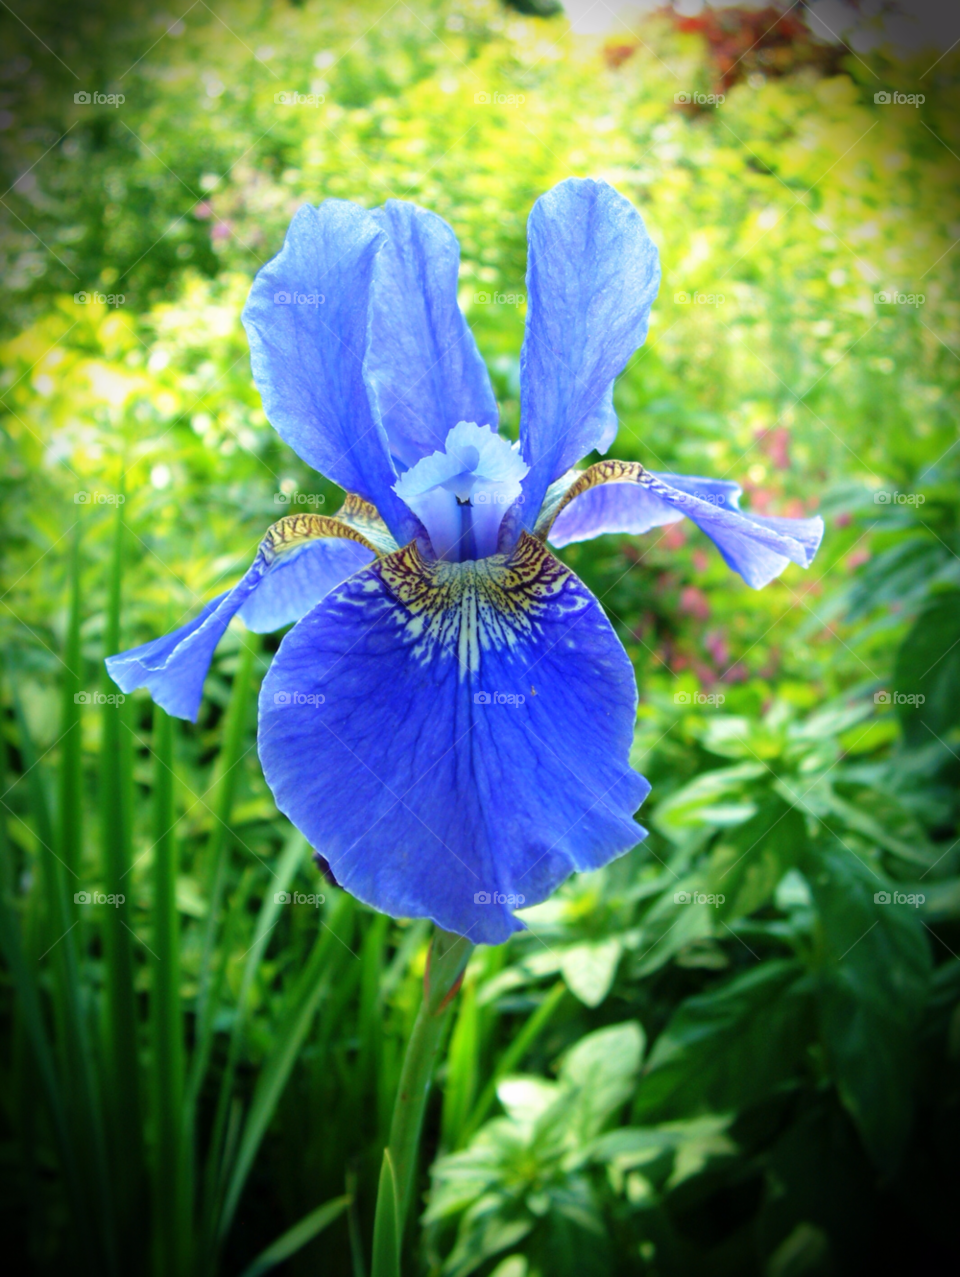 garden nature flower blue by wickerman6666